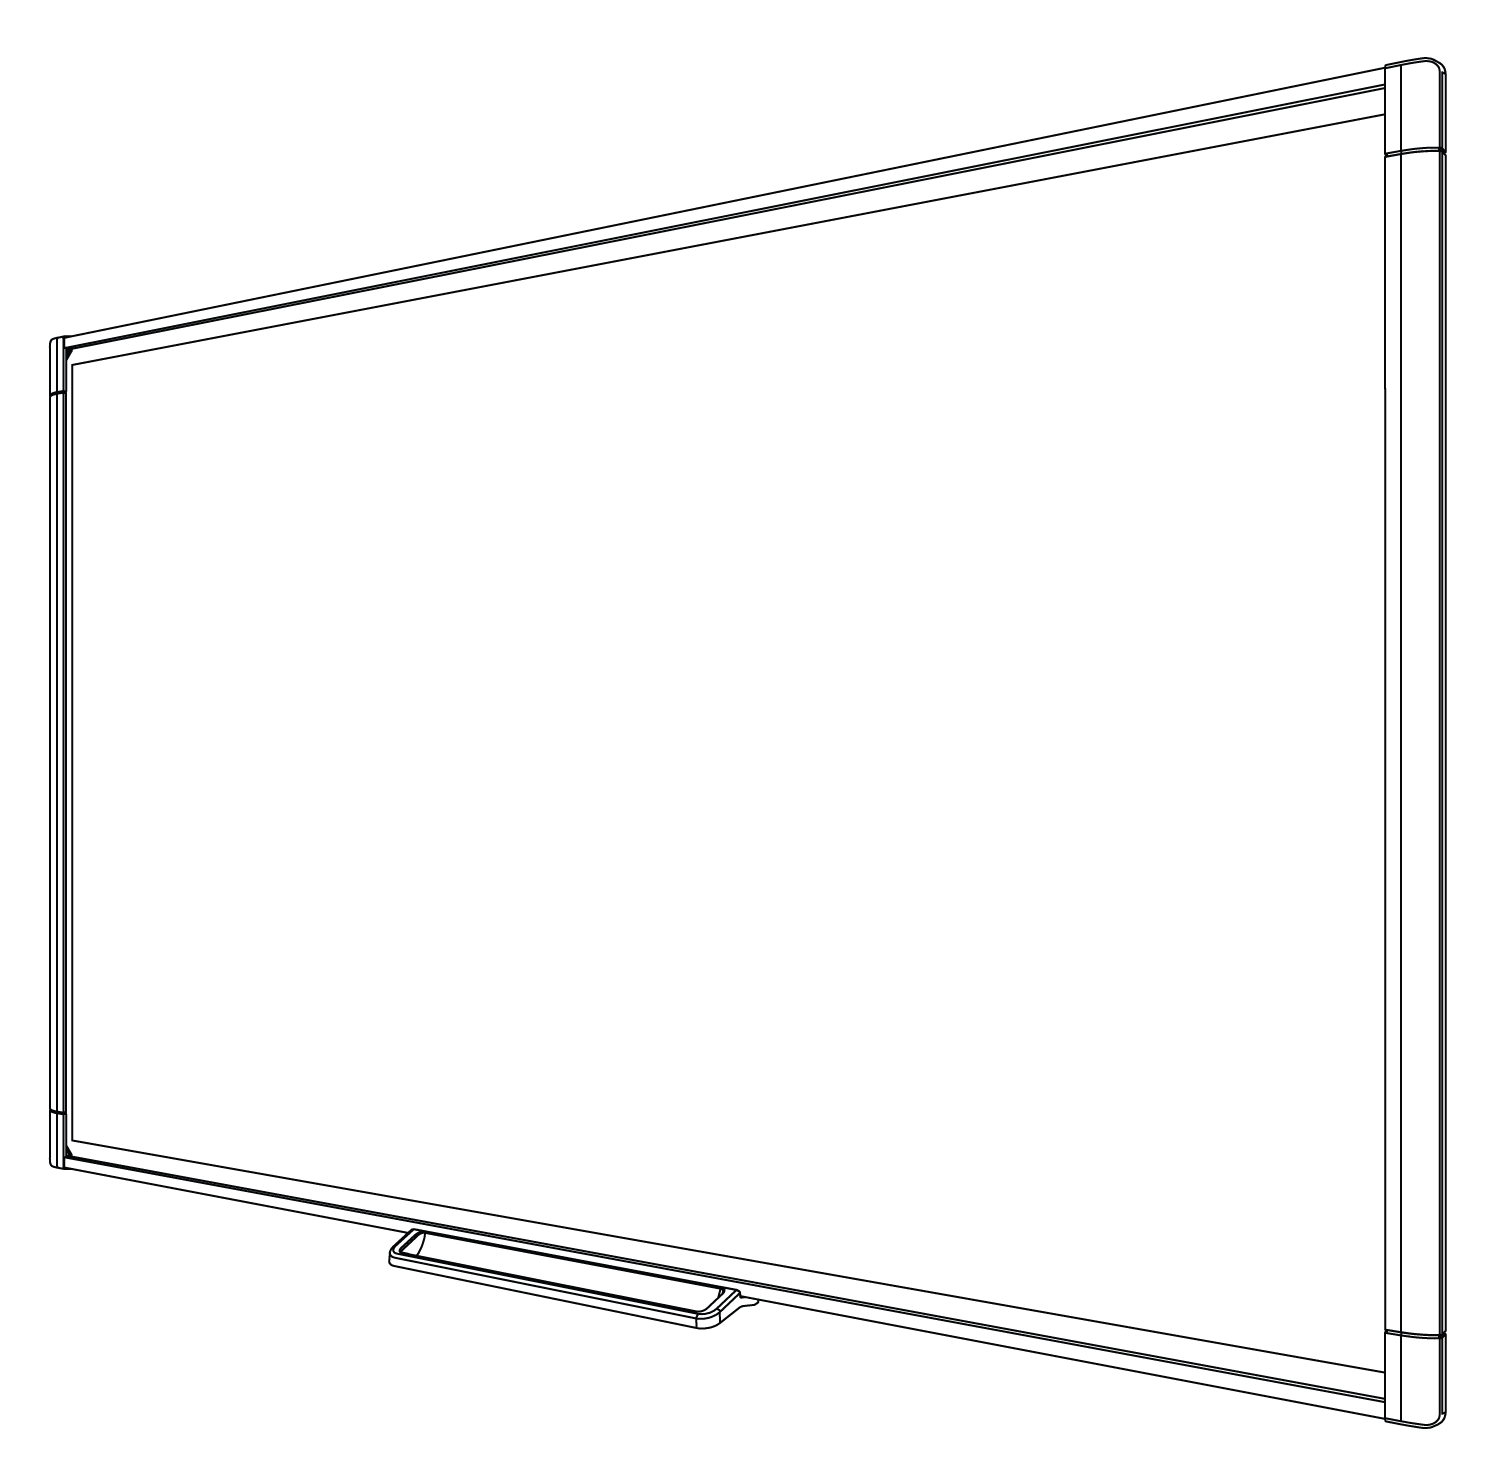 SMART Board 685V interactive whiteboard